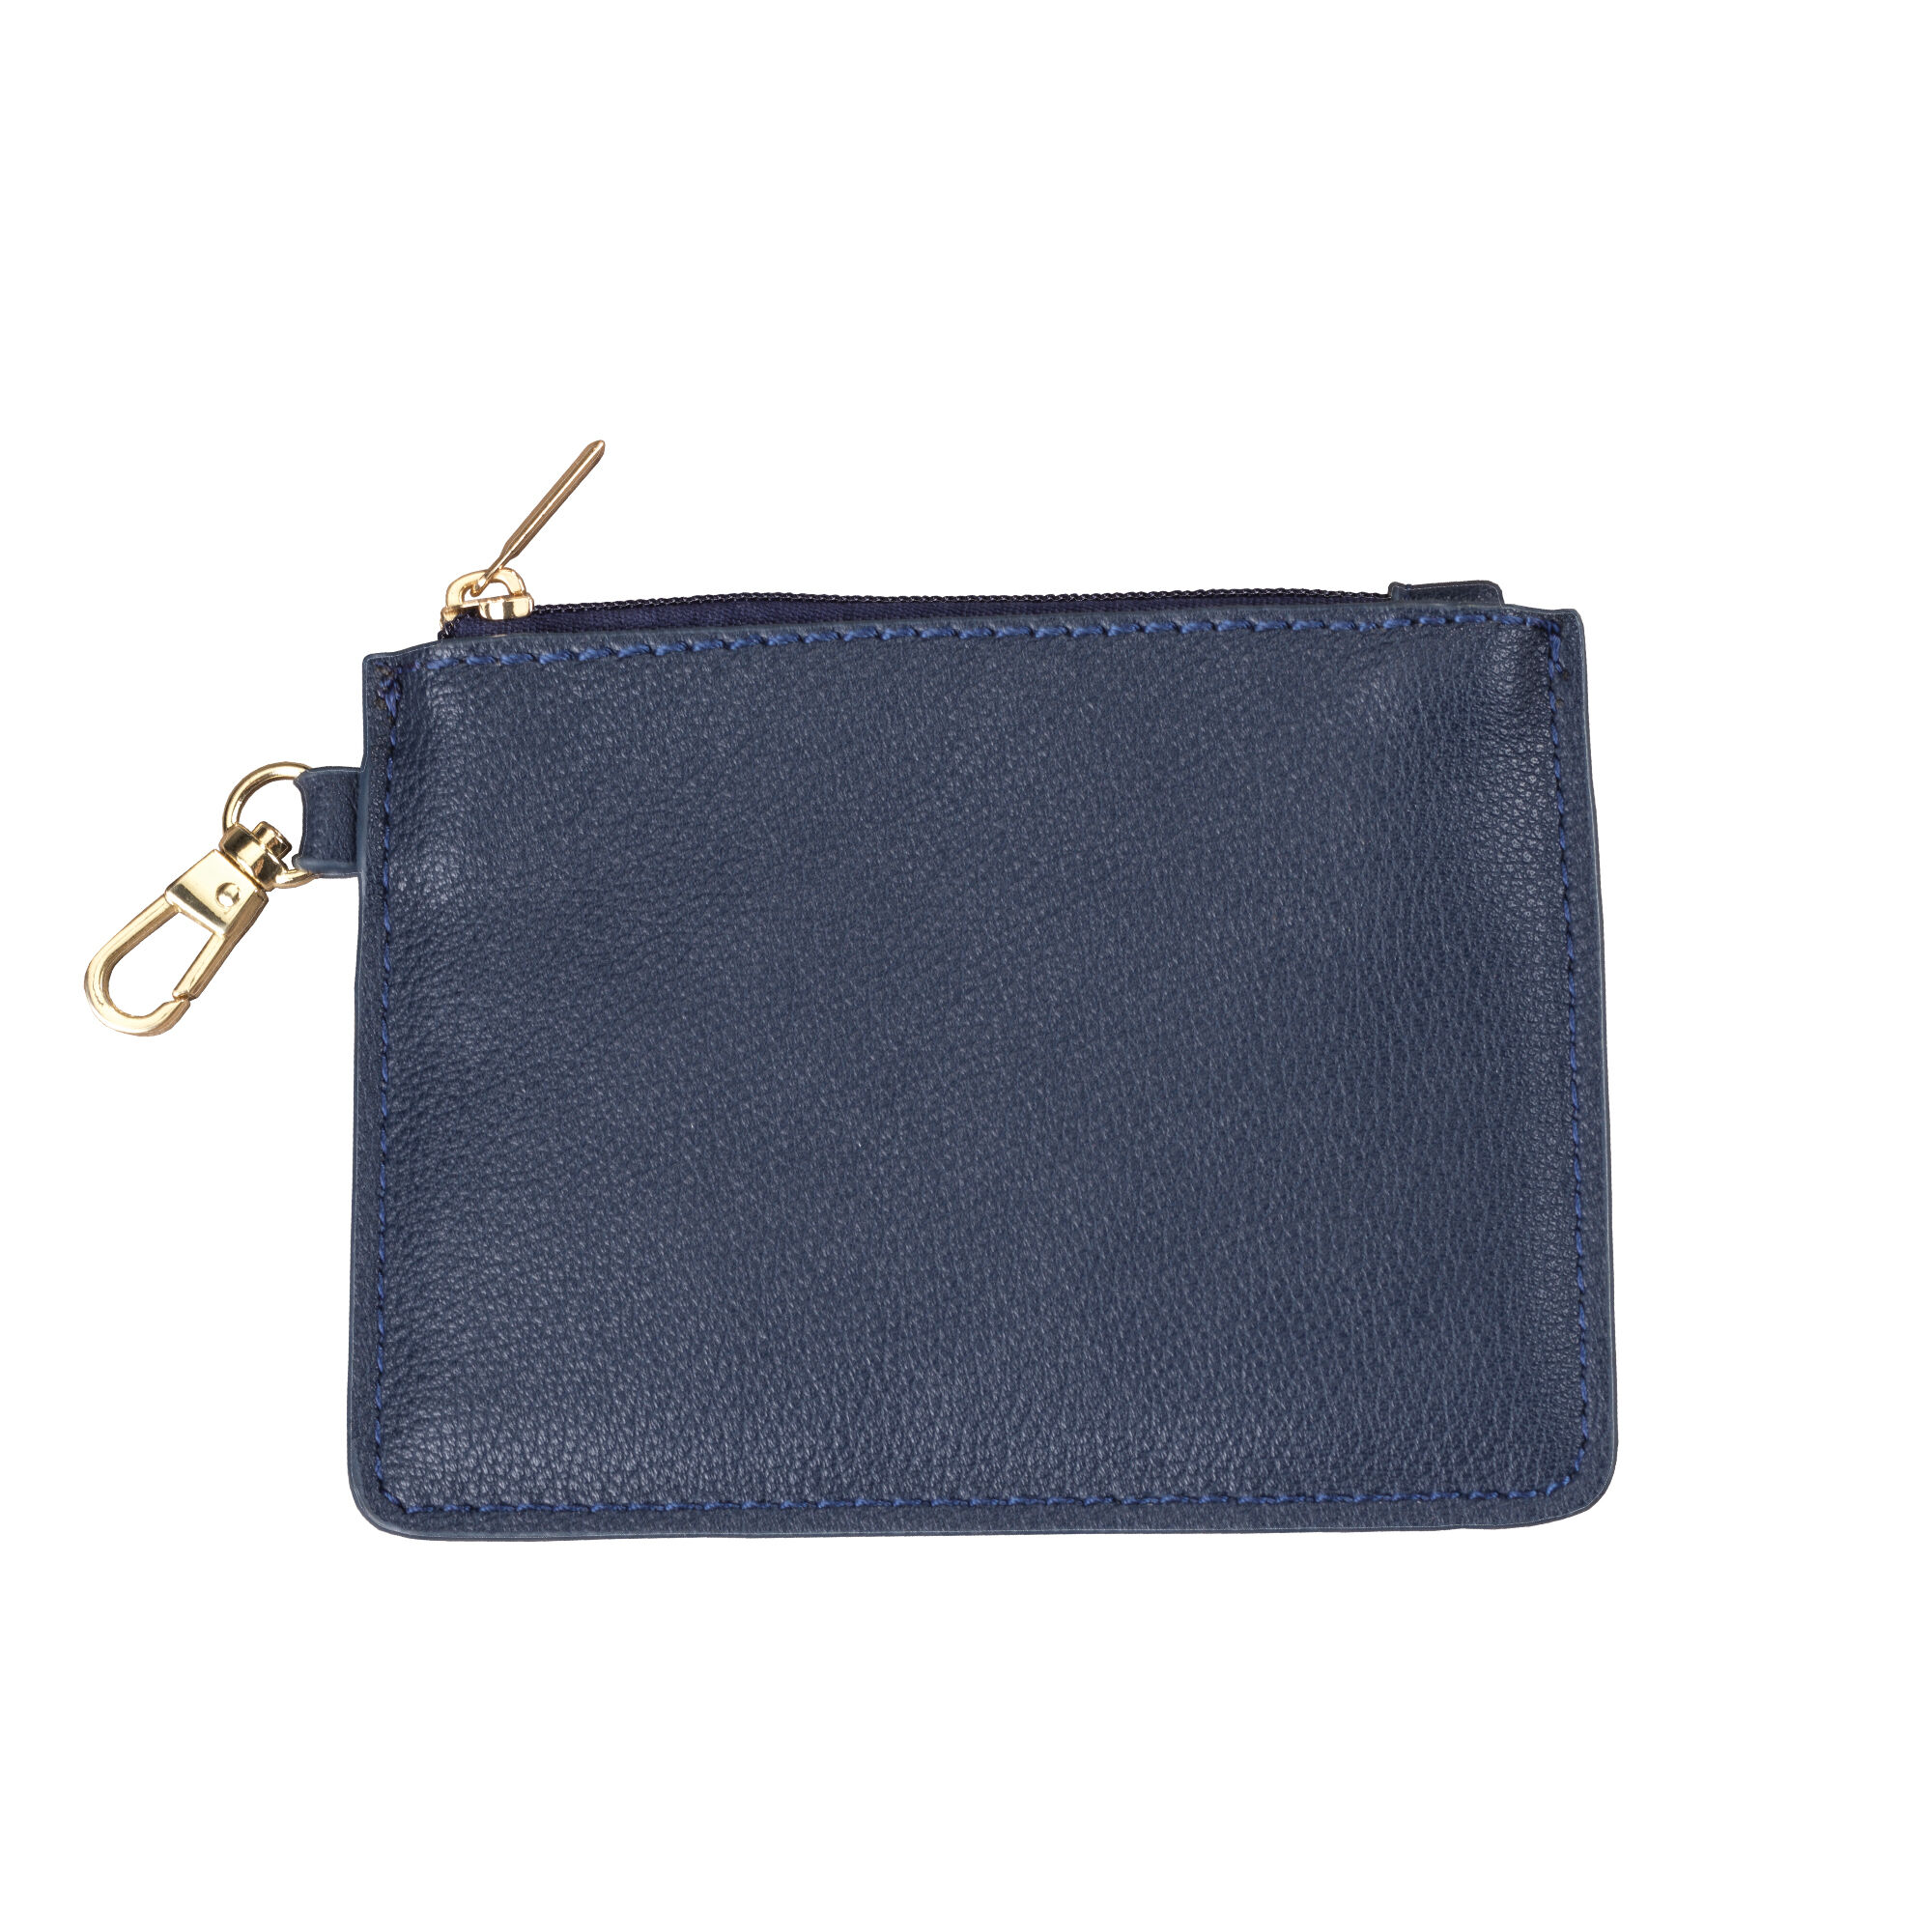 The Personalized Tote 6112 0028 b purse